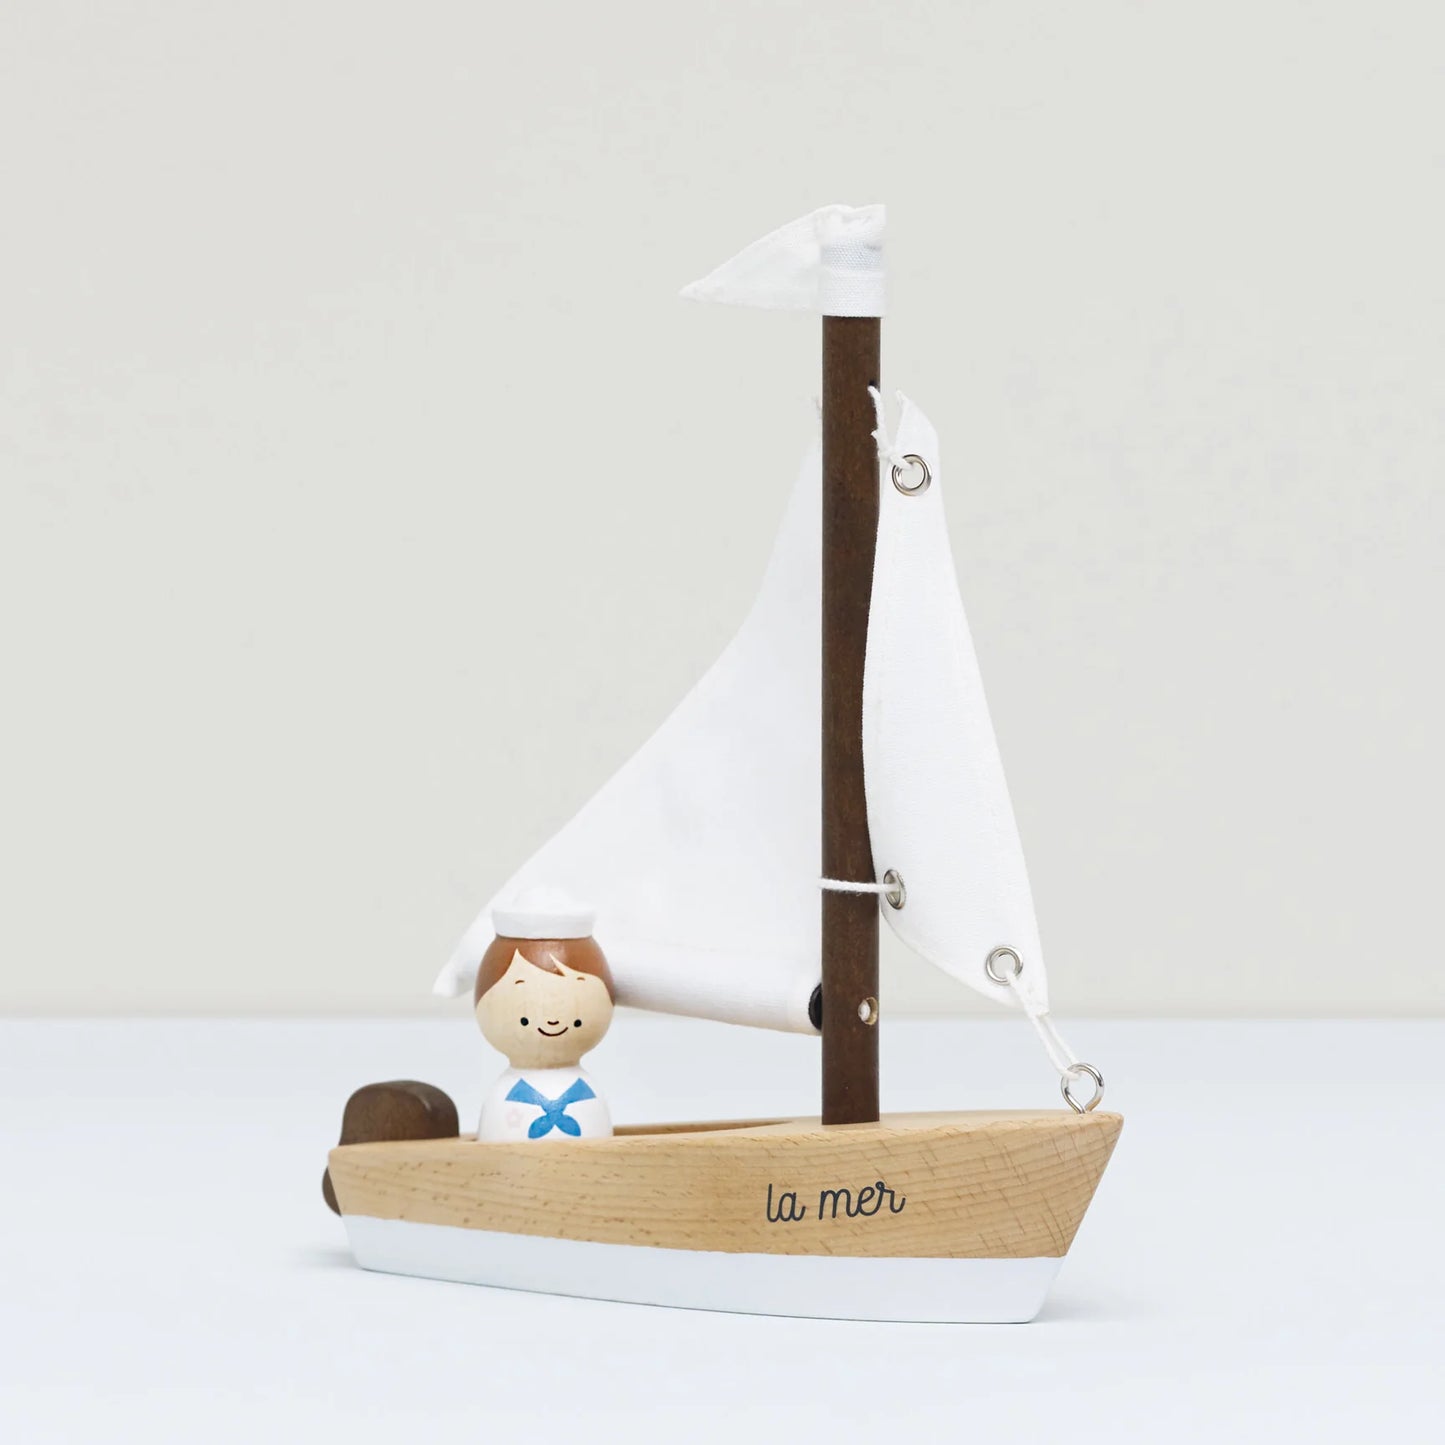 Wooden Sailing Boat & Captain